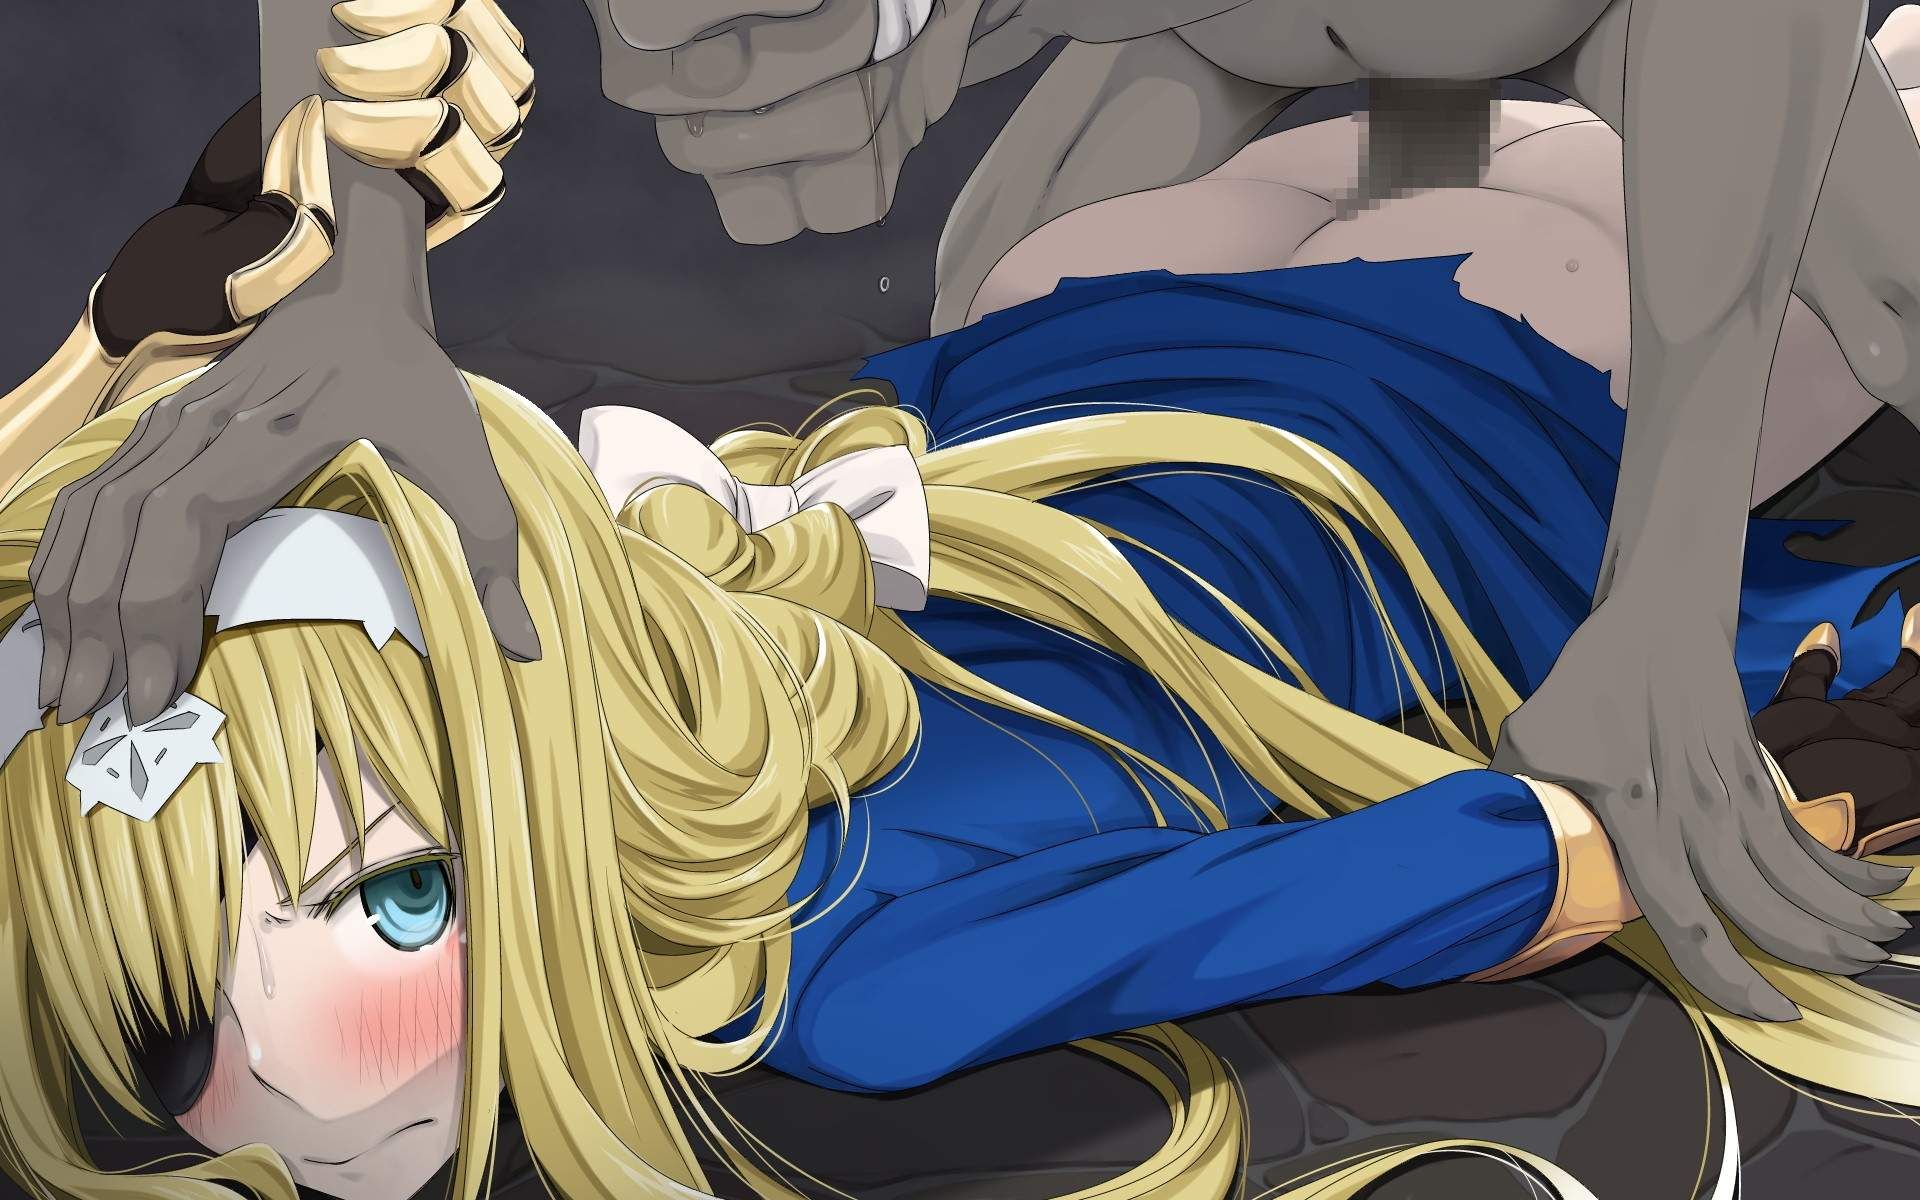 [Erotic anime summary] Sword art online Alice erotic image [secondary erotic] 24